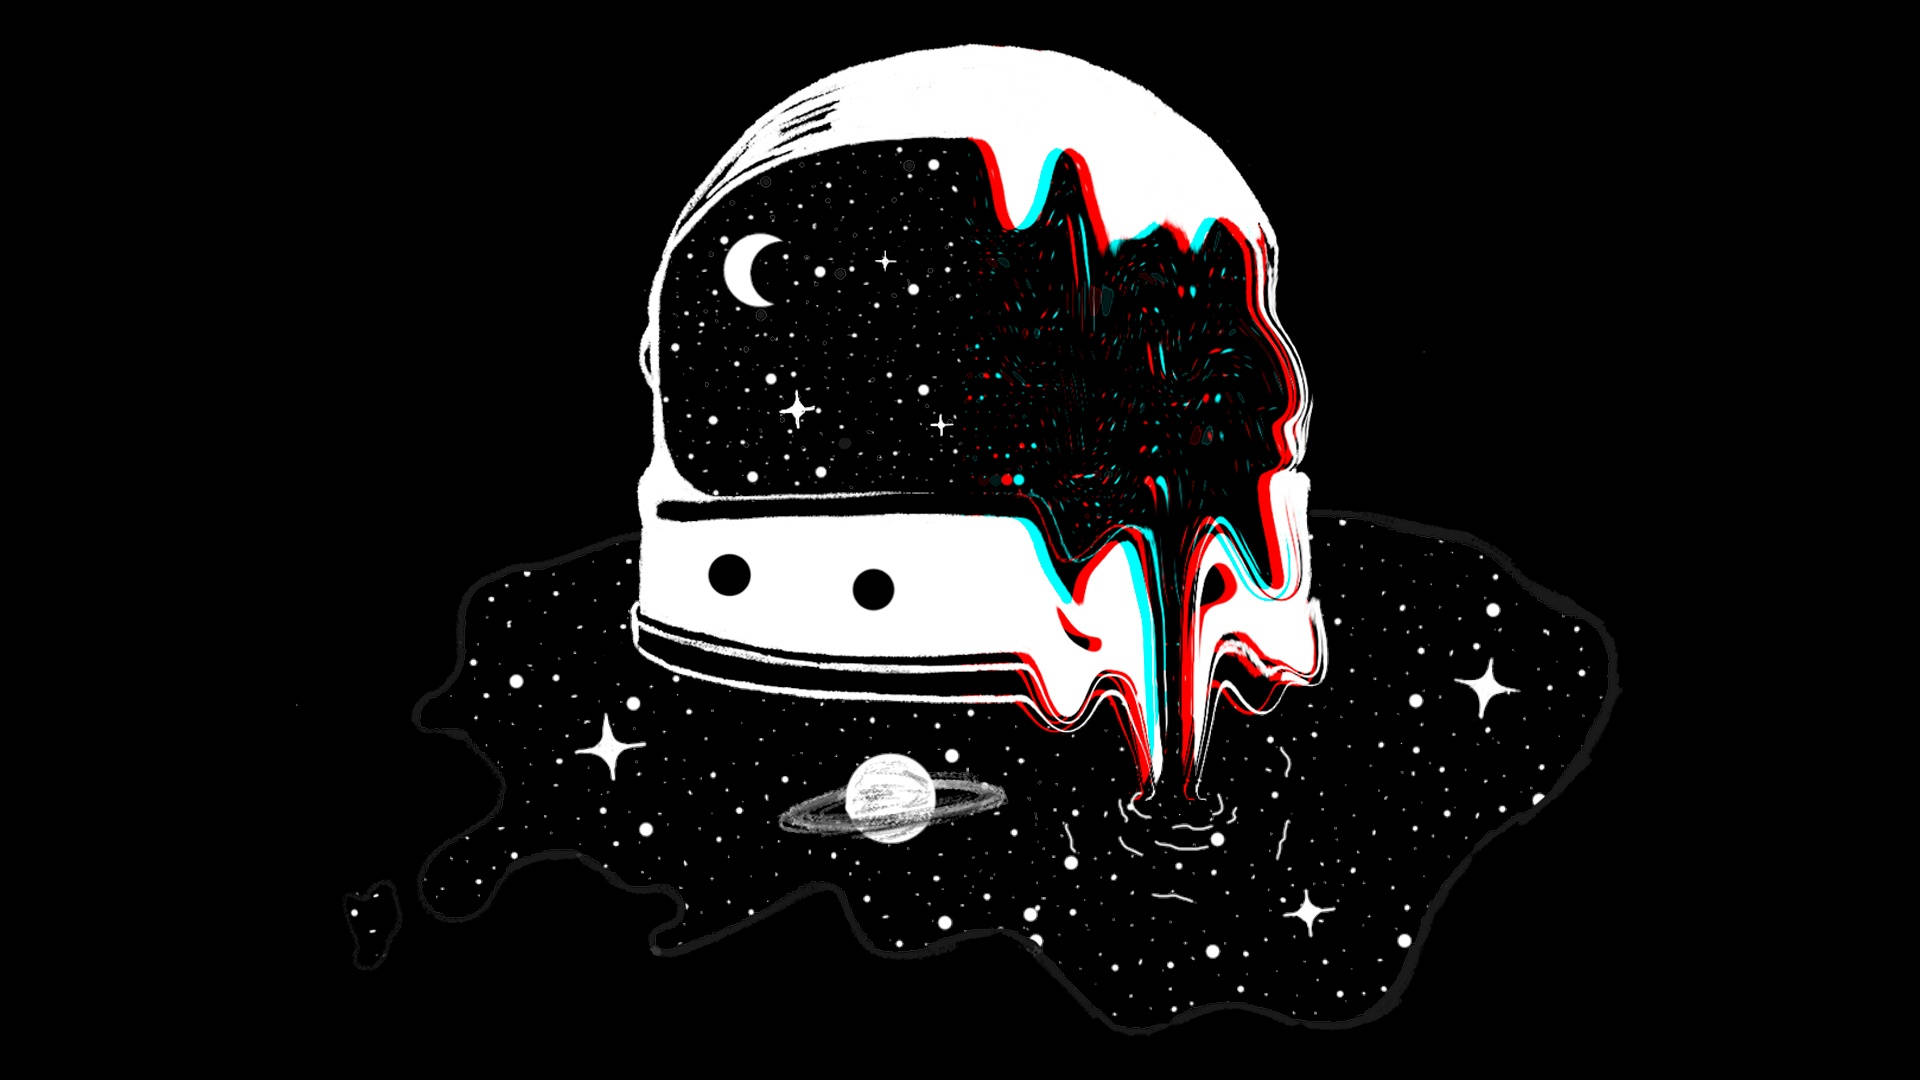 Distorted Astronaut Helmet Trippy Aesthetic